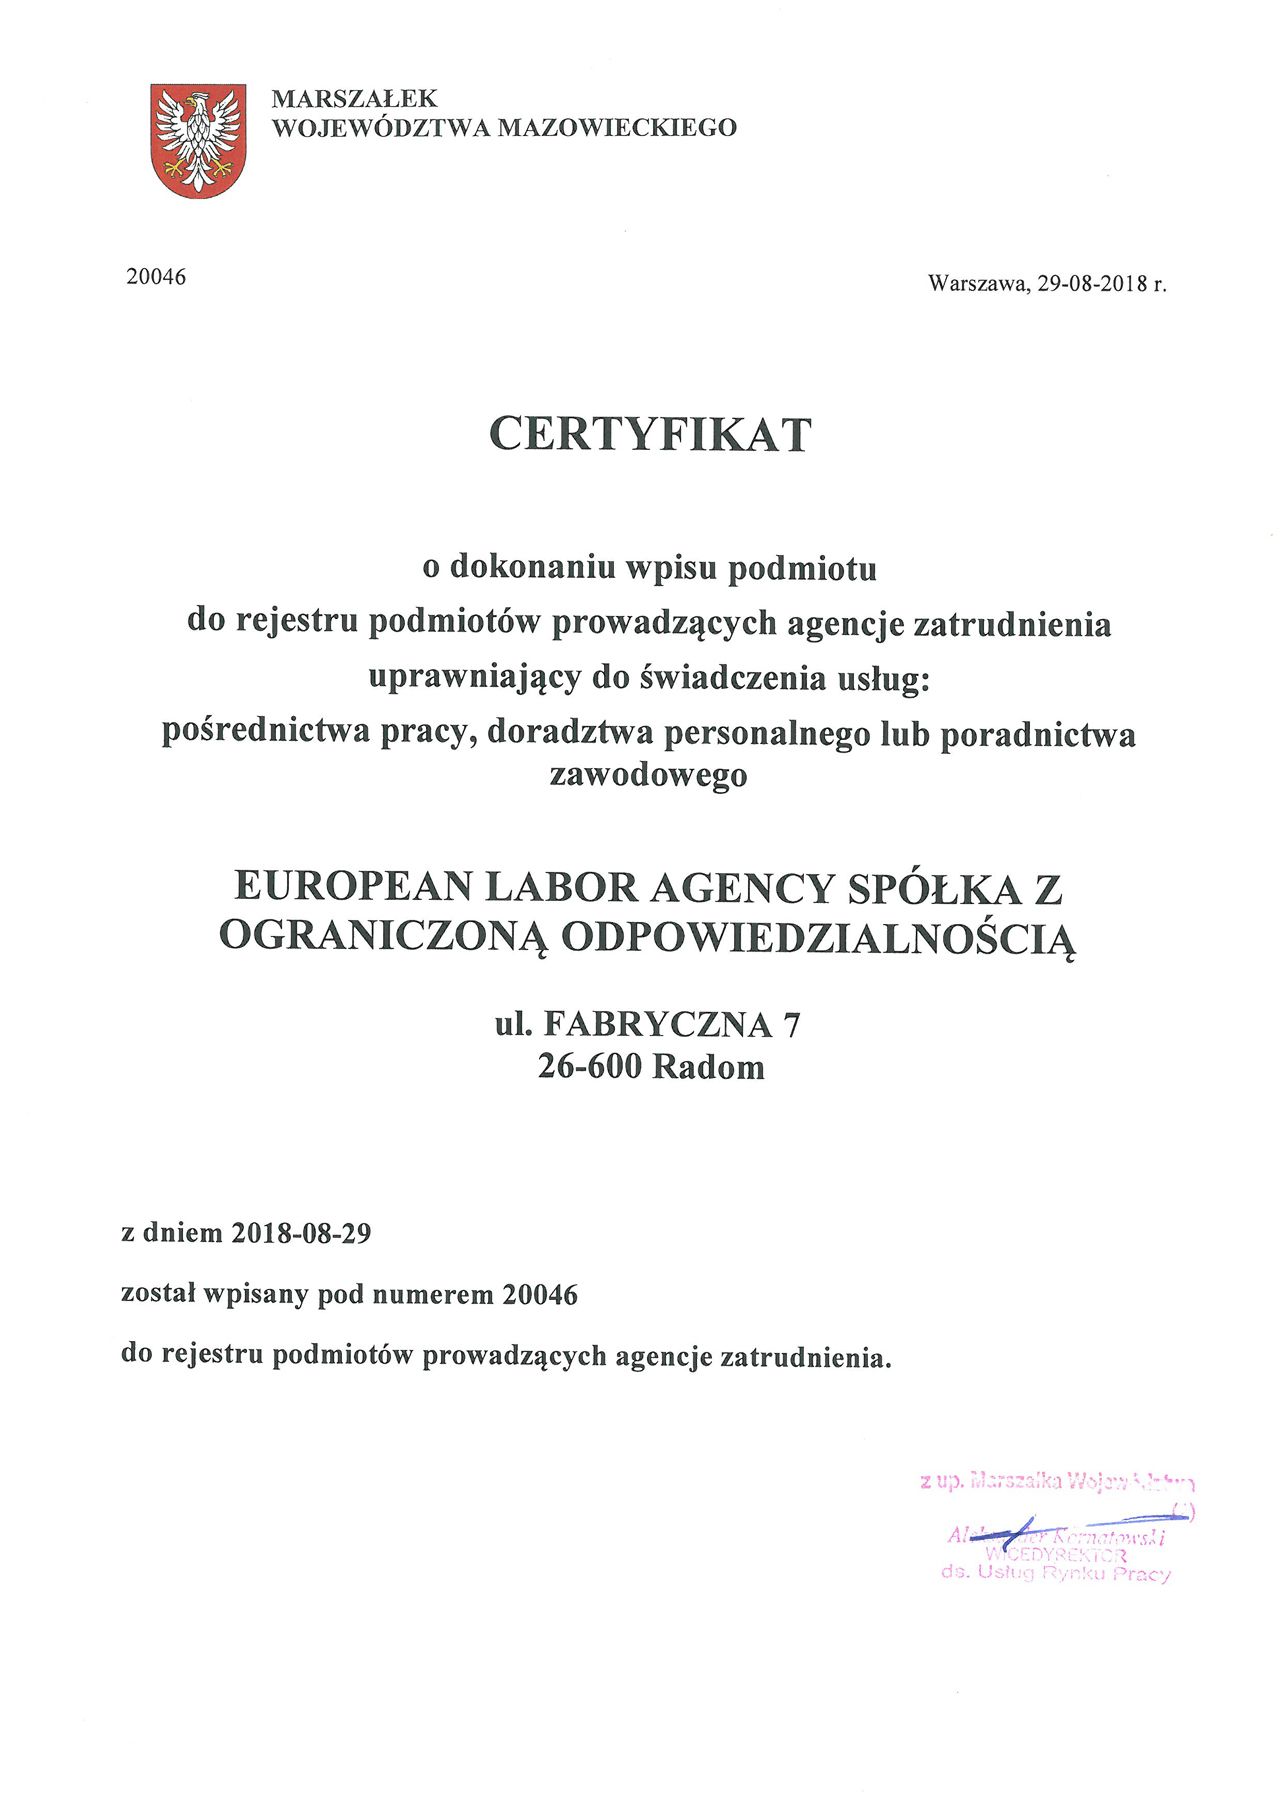 EuropLaborAgency posrednictwo certyfikat